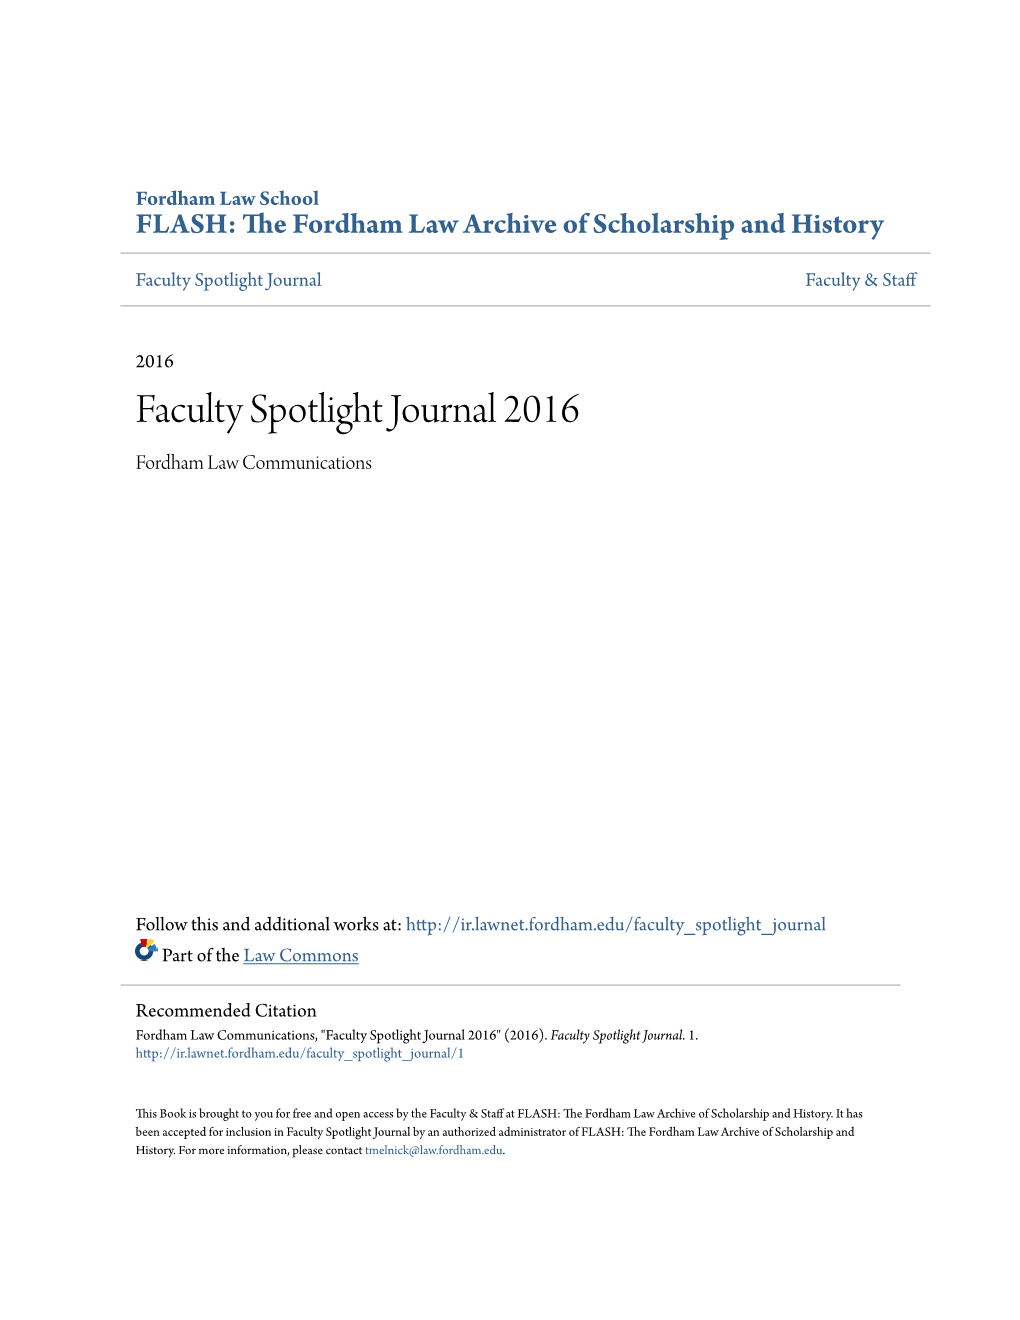 Faculty Spotlight Journal 2016 Fordham Law Communications